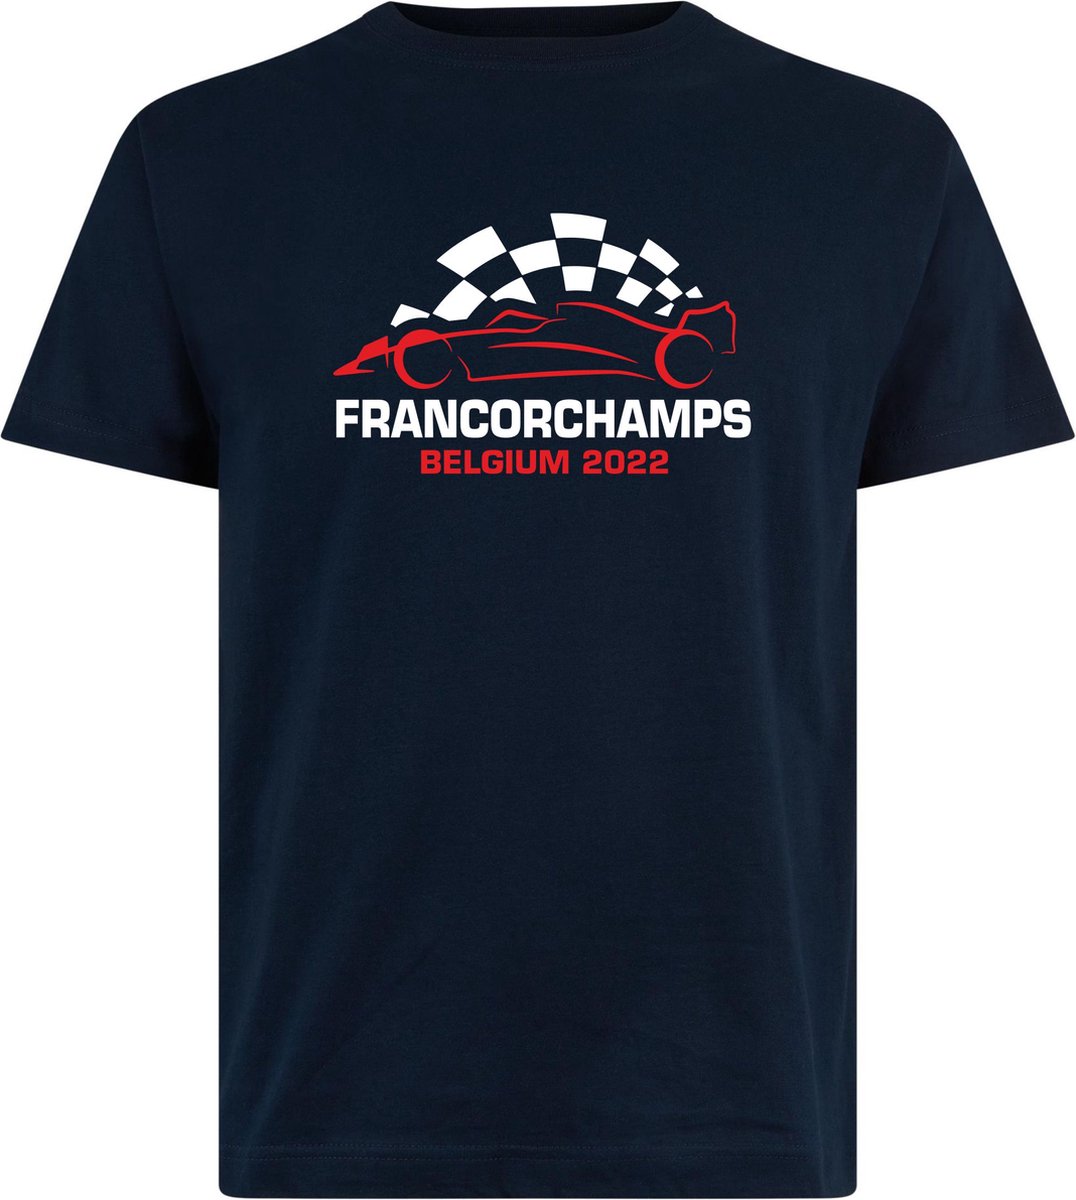 T-shirt Francorchamps Belgium 2022 met raceauto | Max Verstappen / Red Bull Racing / Formule 1 fan | Grand Prix Circuit Spa-Francorchamps | kleding shirt | Navy | maat 3XL